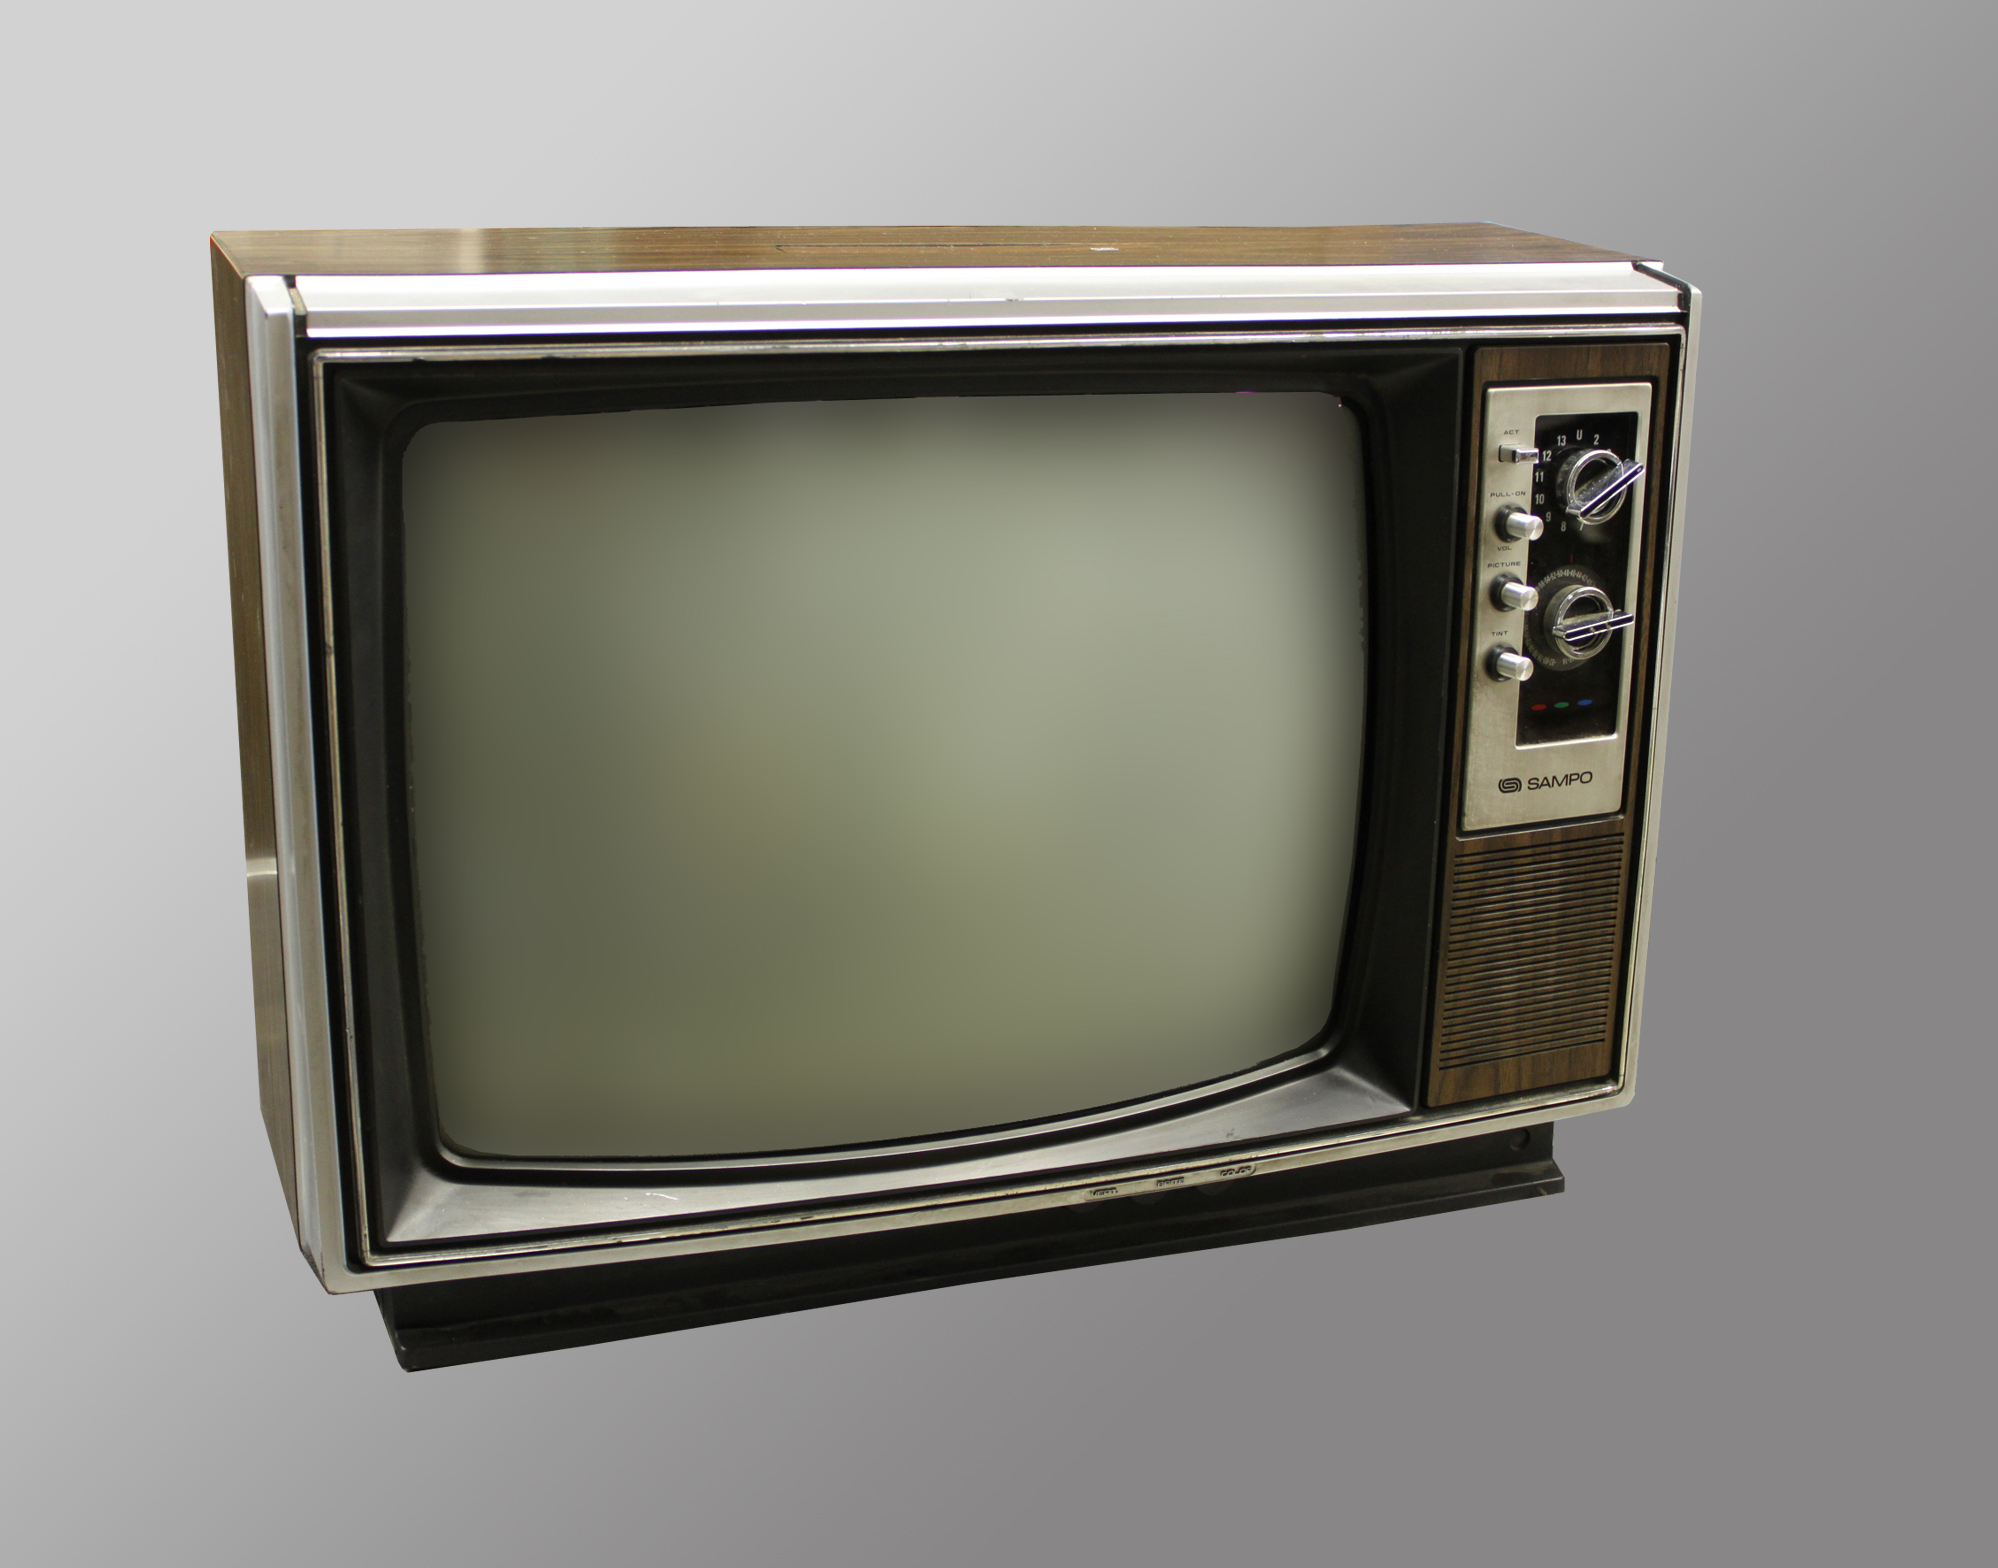 Т д тв. Телевизор Горизонт 206. Телевизор 80гц. Советский телевизор Горизонт 206. Старый телевизор.